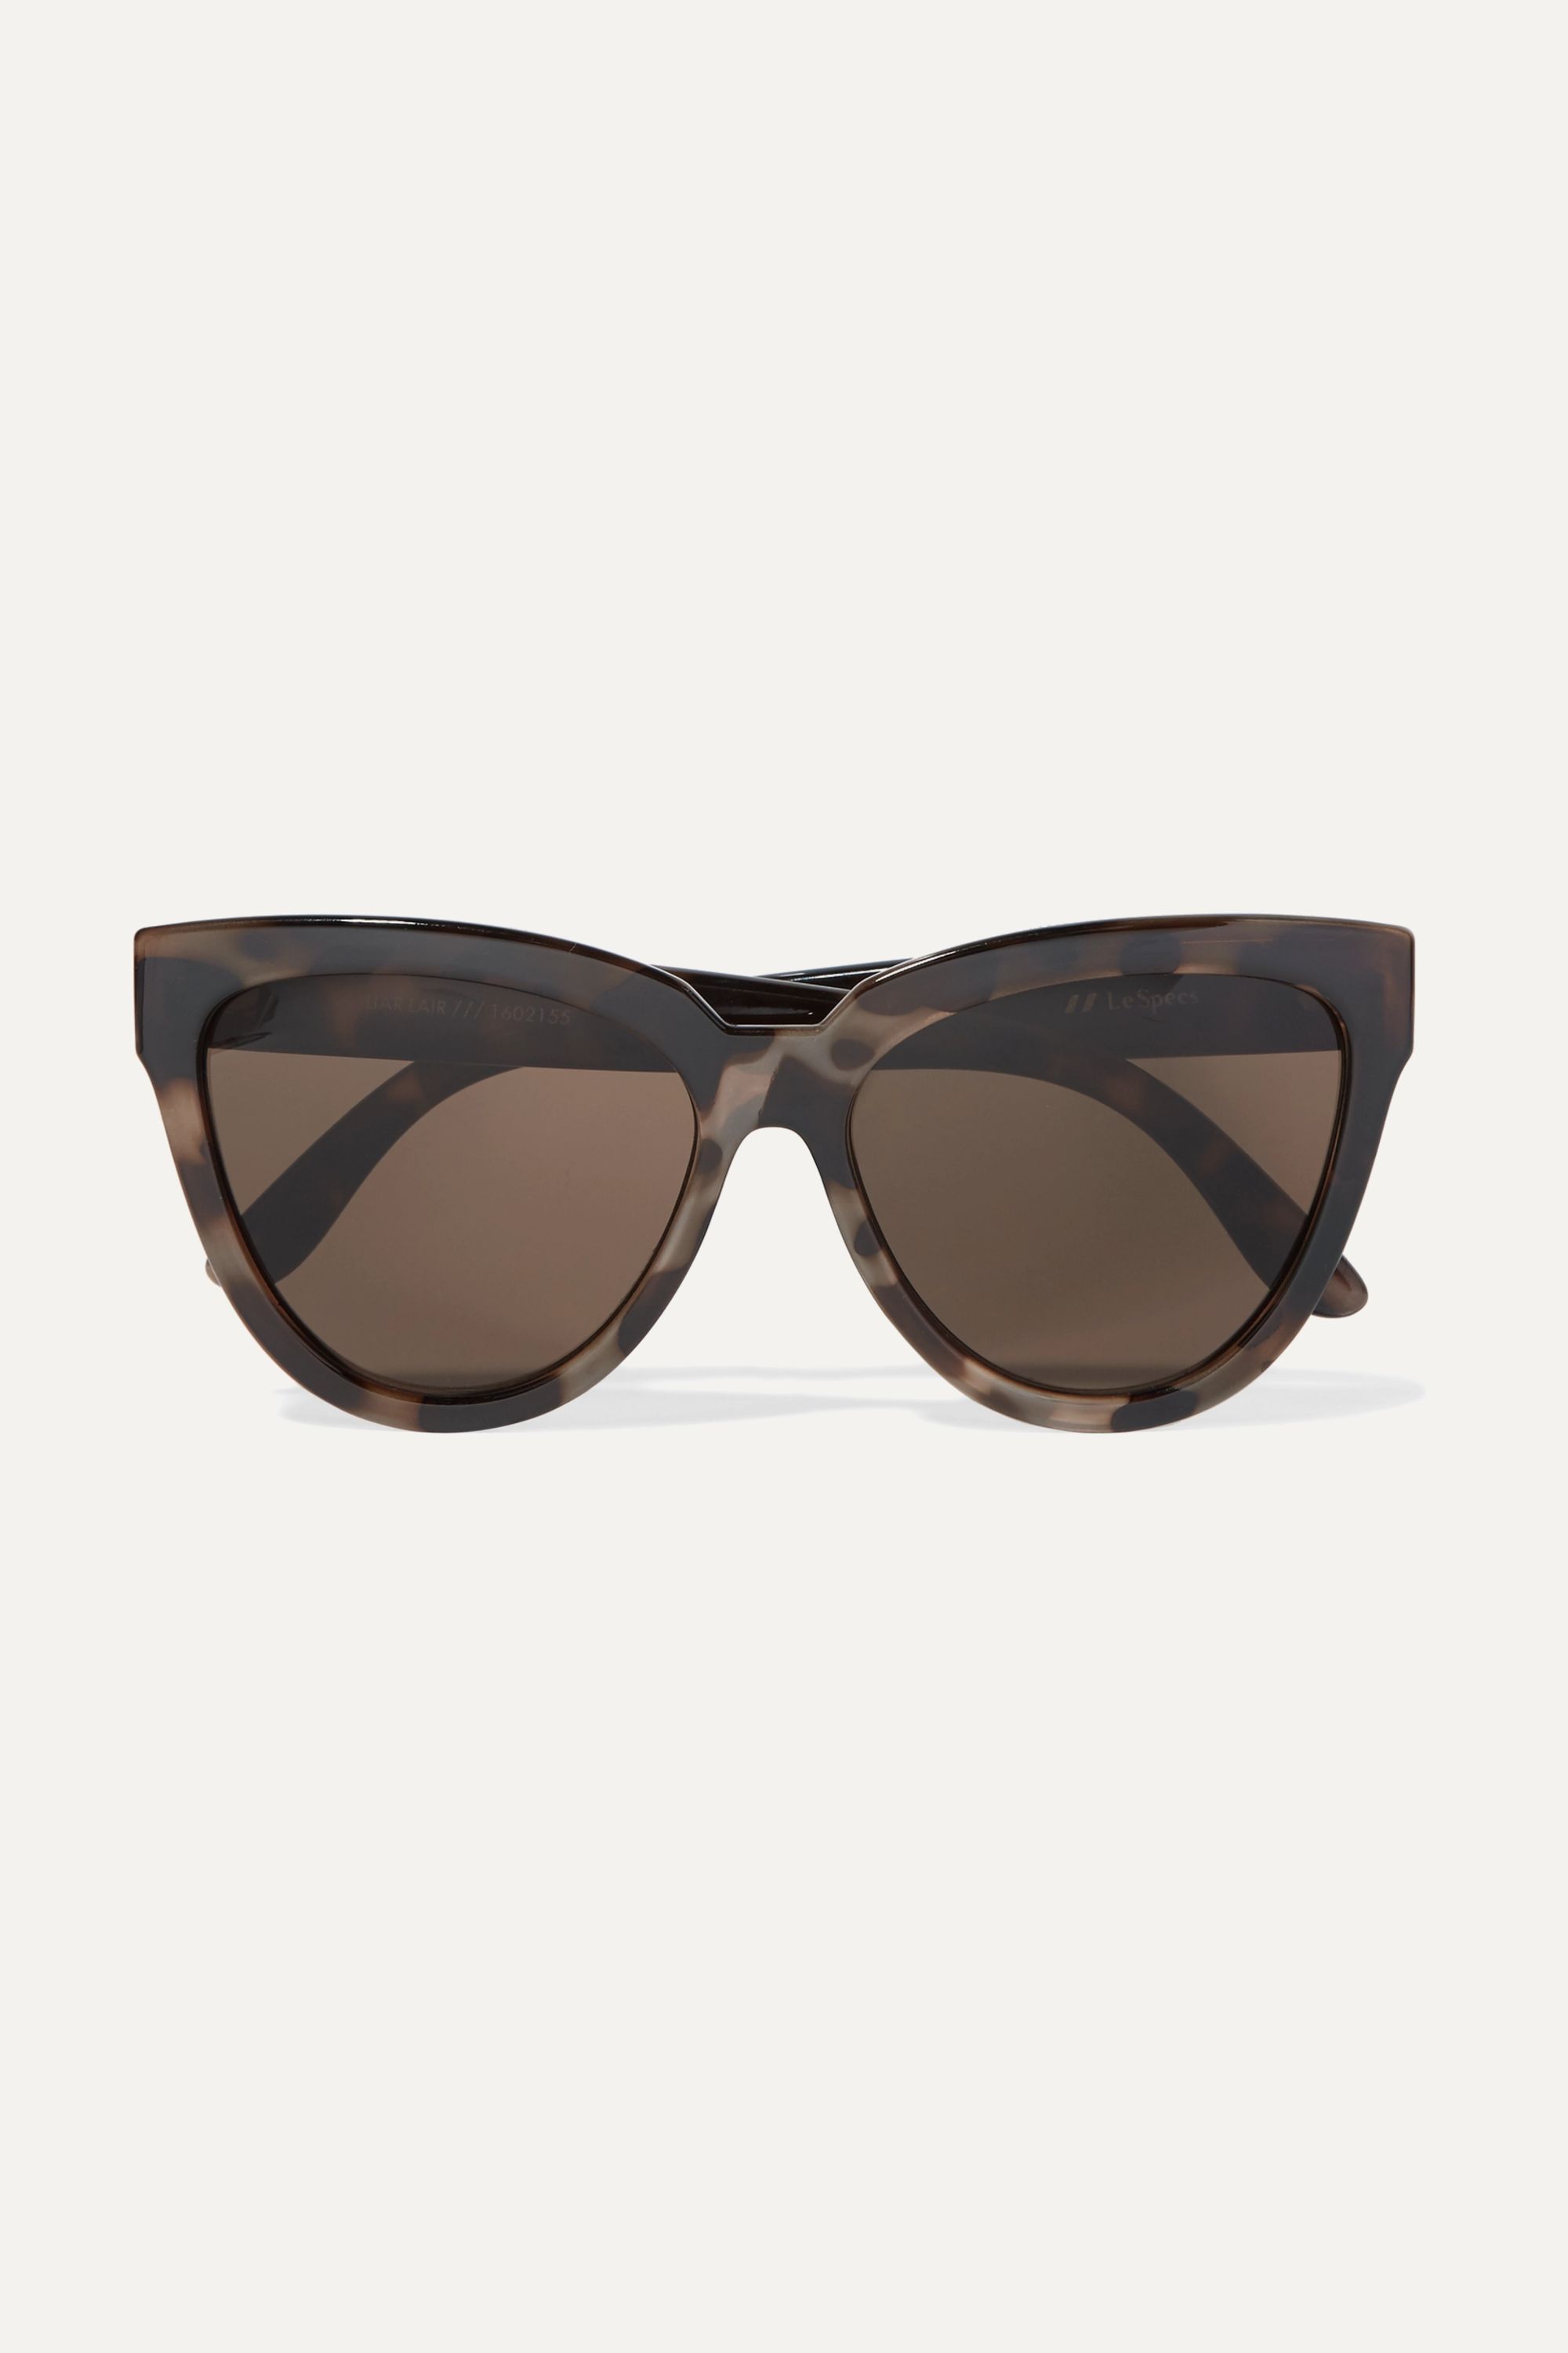 Buy SCUBE Fashion Unisex Rectangular Cateye Megan Sunglasses with UV400  Protection (Black-Silver) at Amazon.in